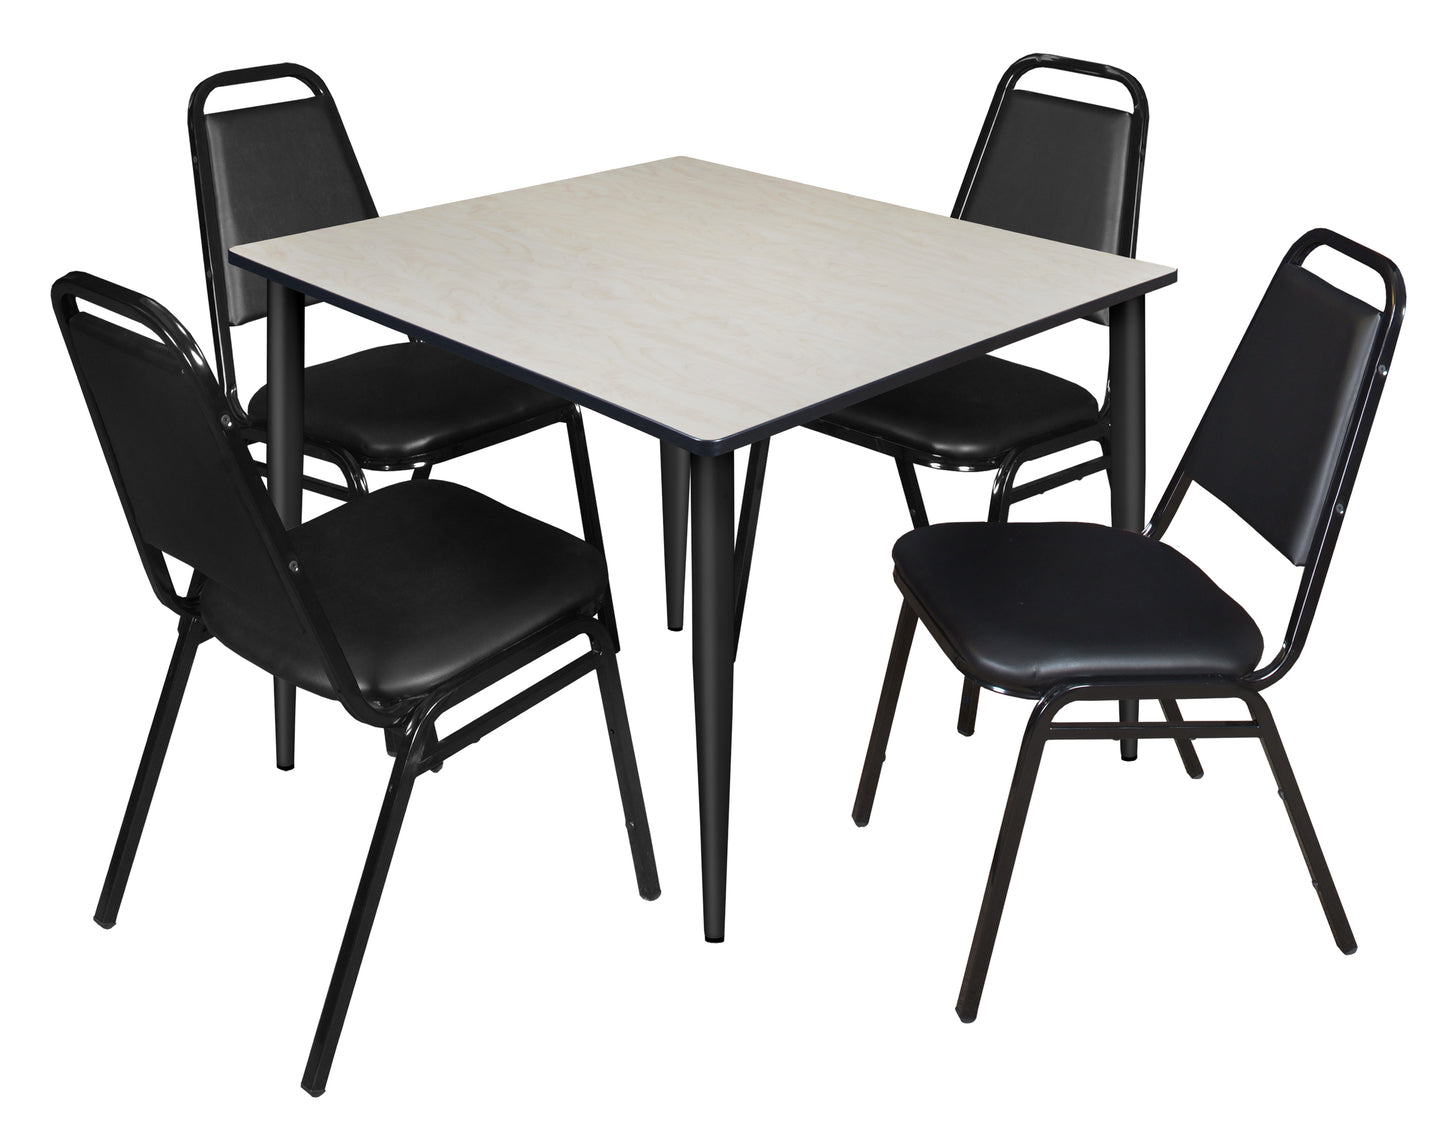 Regency Kahlo 48 in. Square Breakroom Table& 4 Restaurant Stack Chairs - Black